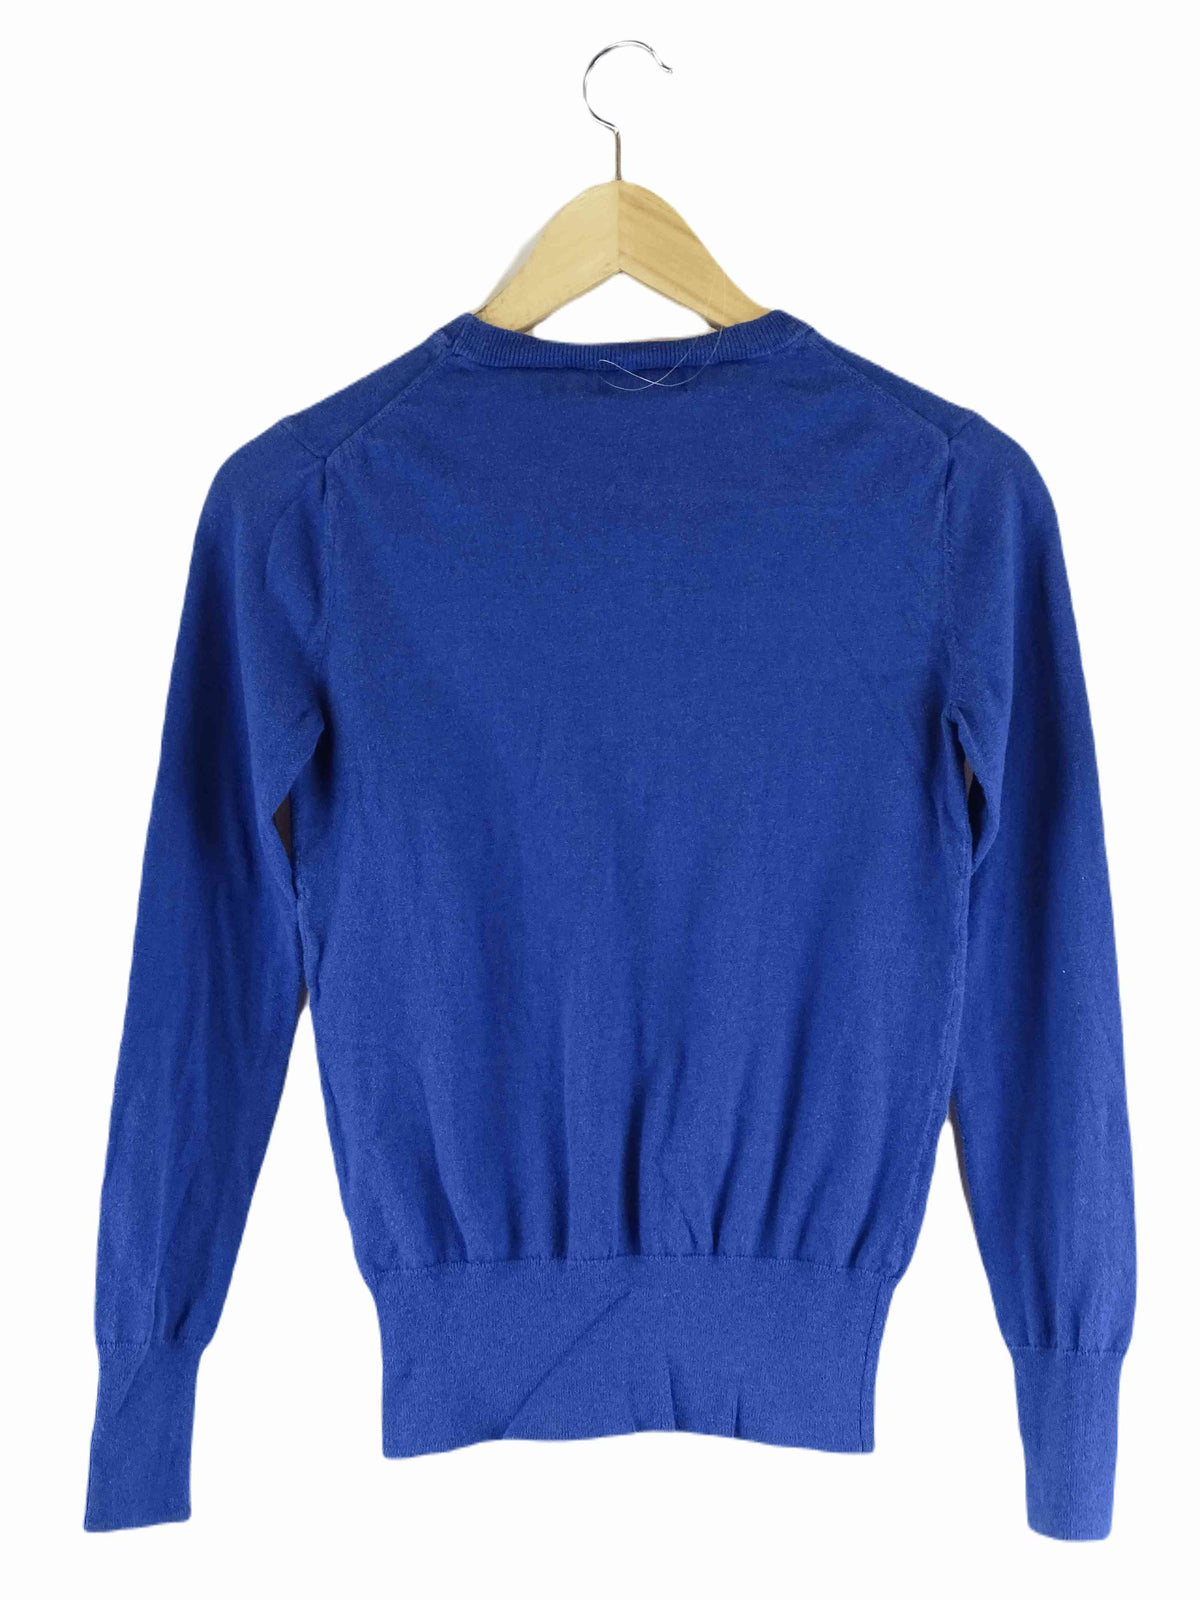 Oxford Blue Cashmere Blend Sweater 6